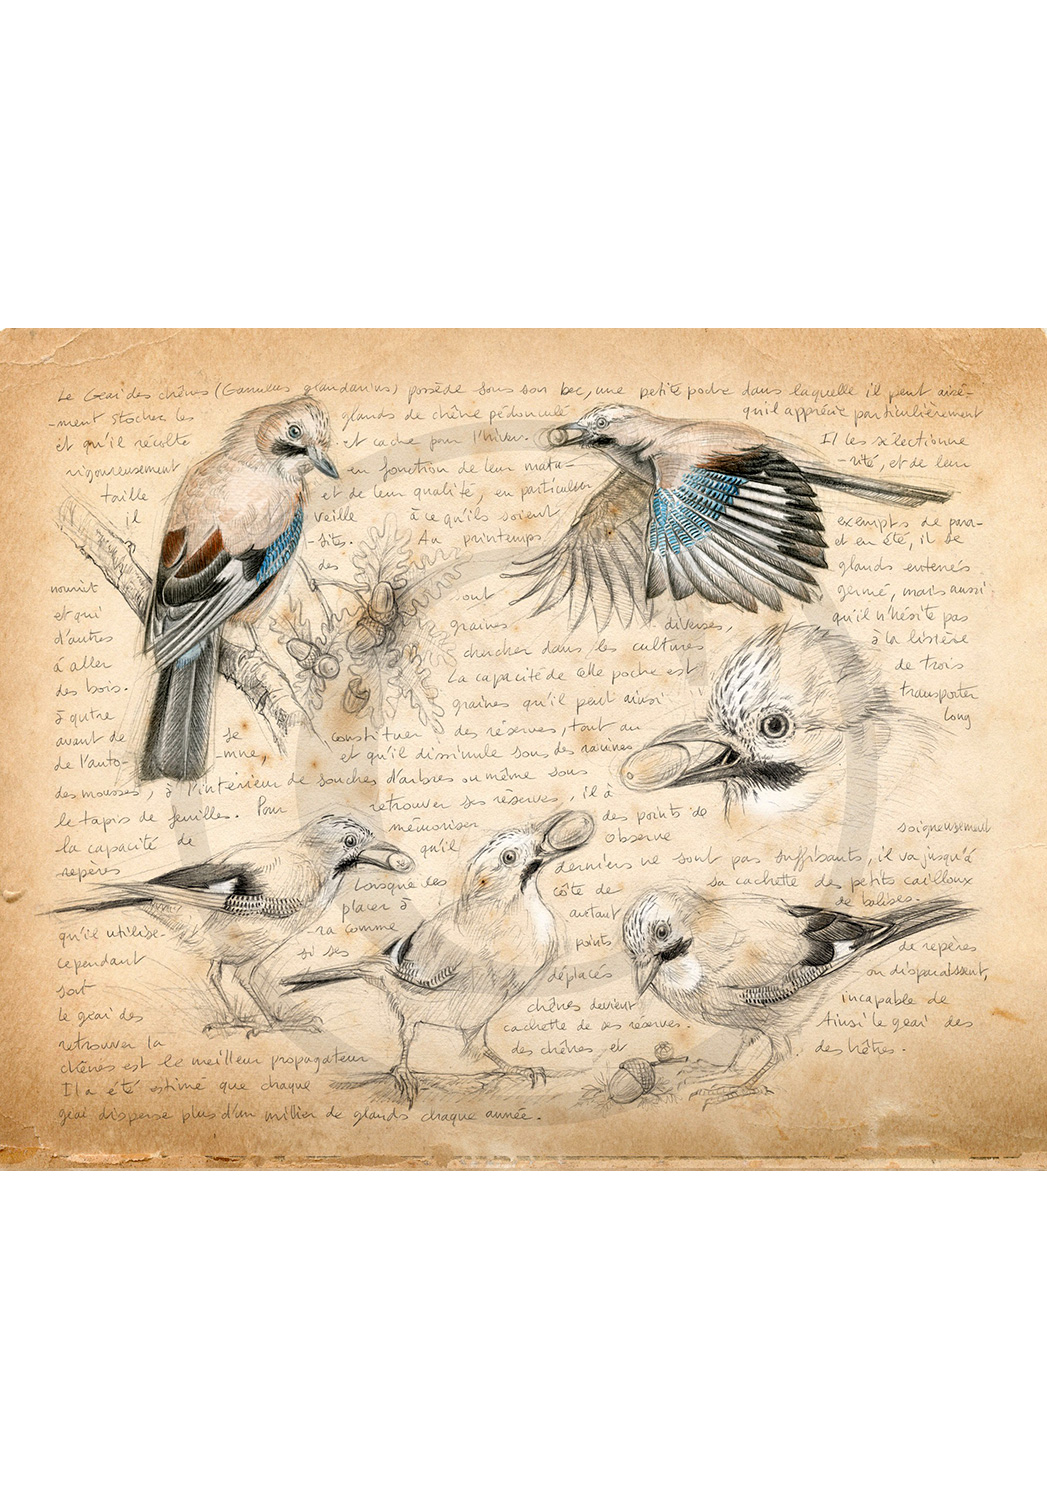 Marcello-art : Ornithologie 273 - Geai des chênes